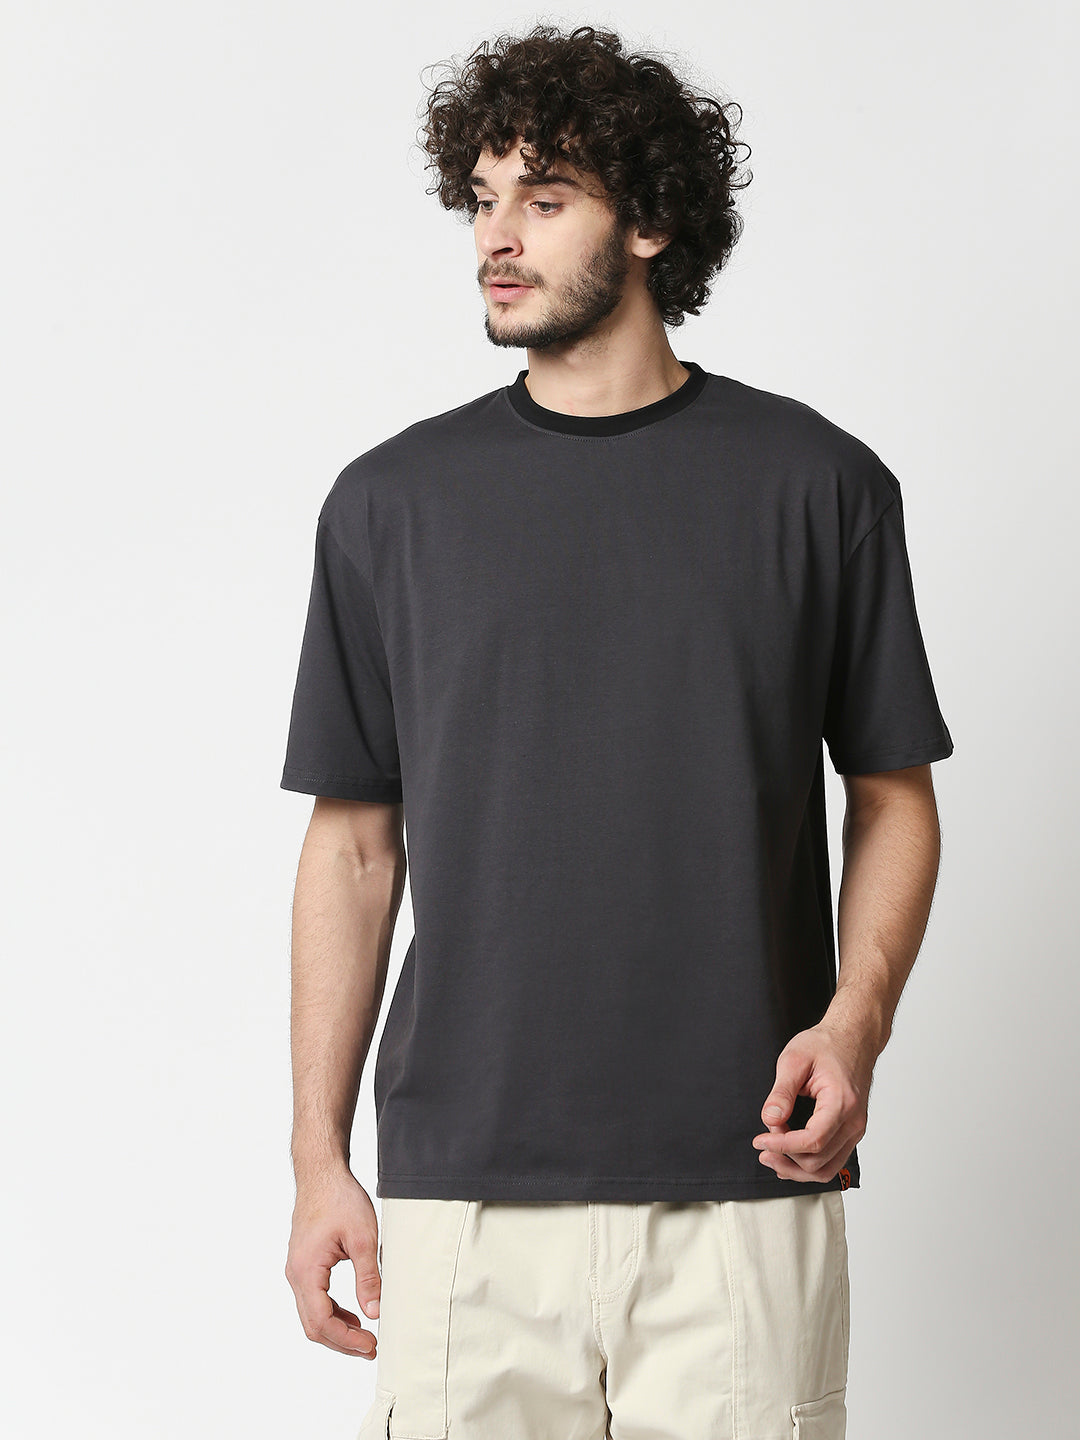 Buy Men's Over Size Fit Back print Dark gray Baggy T-Shirt